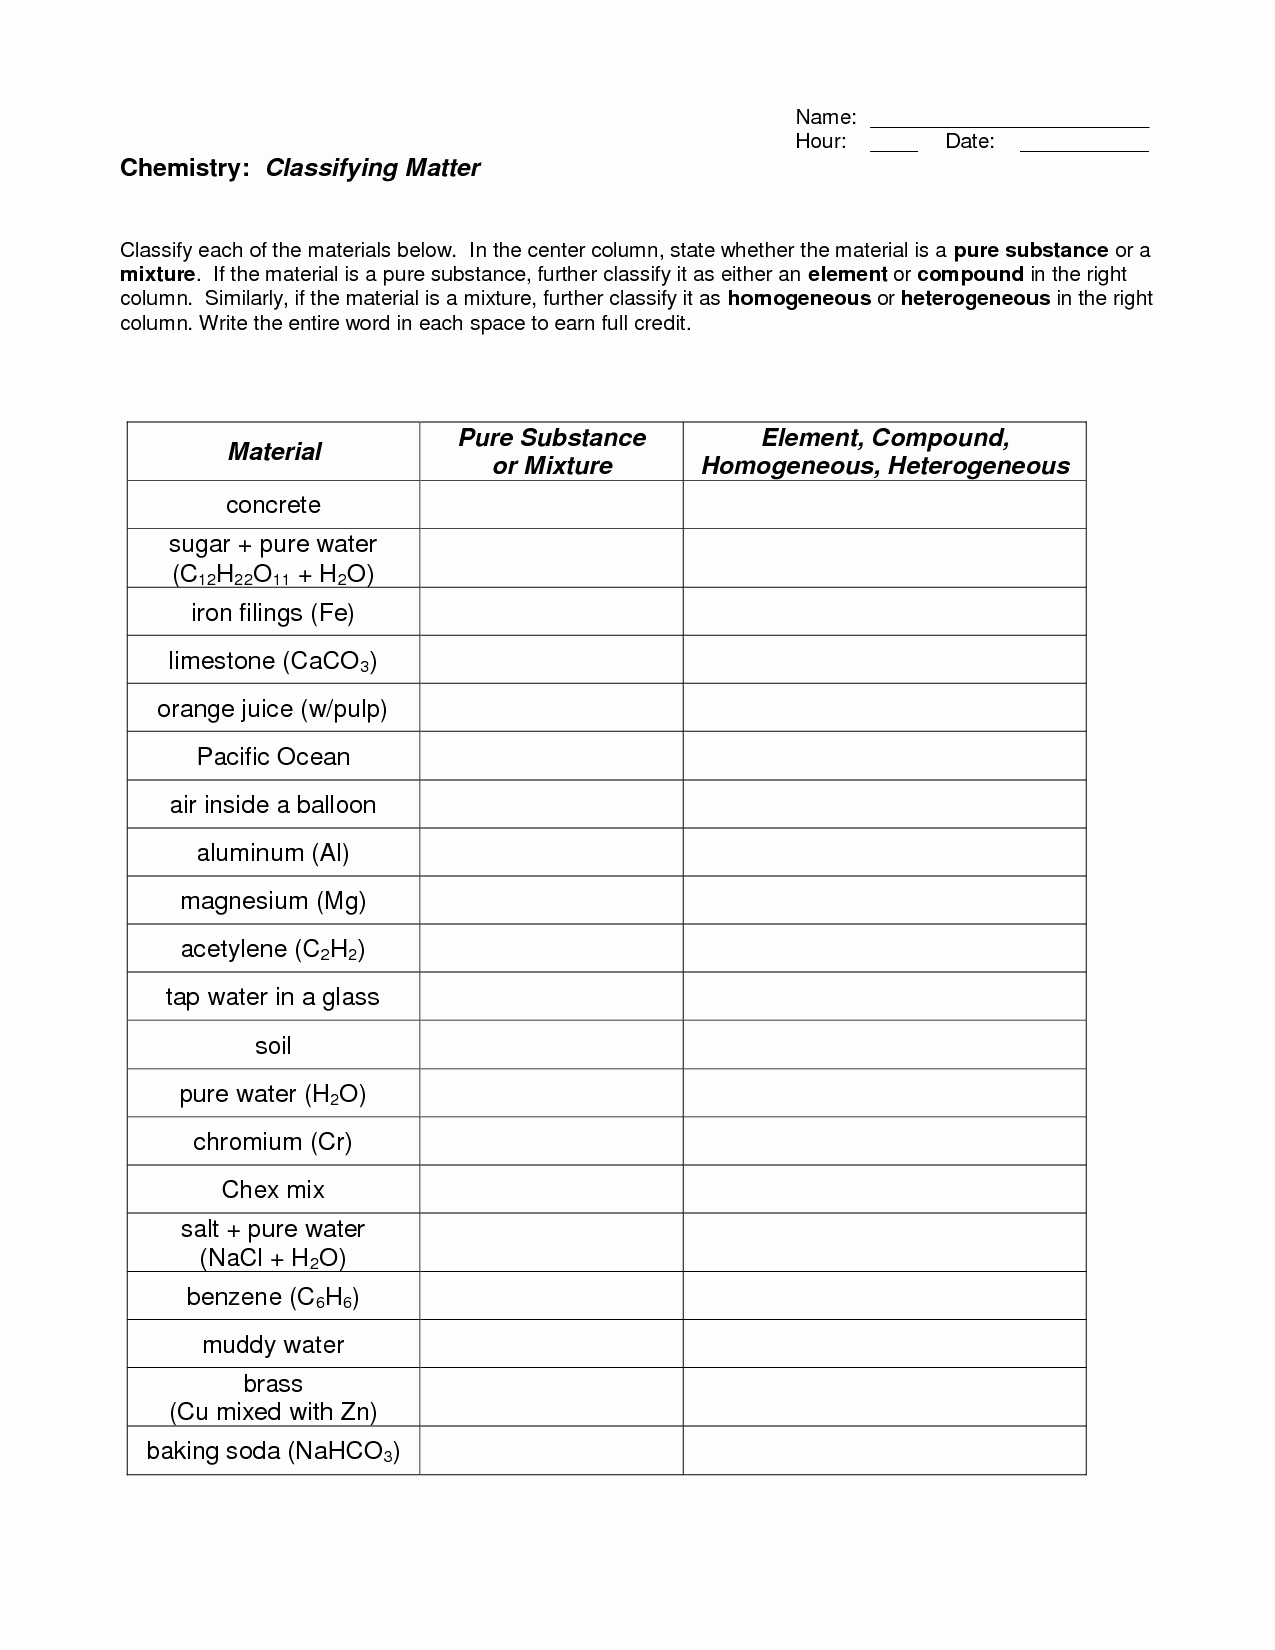 Mixtures Worksheet Answer Key Elegant Pure Substances and Mixtures Worksheet the Best Worksheets